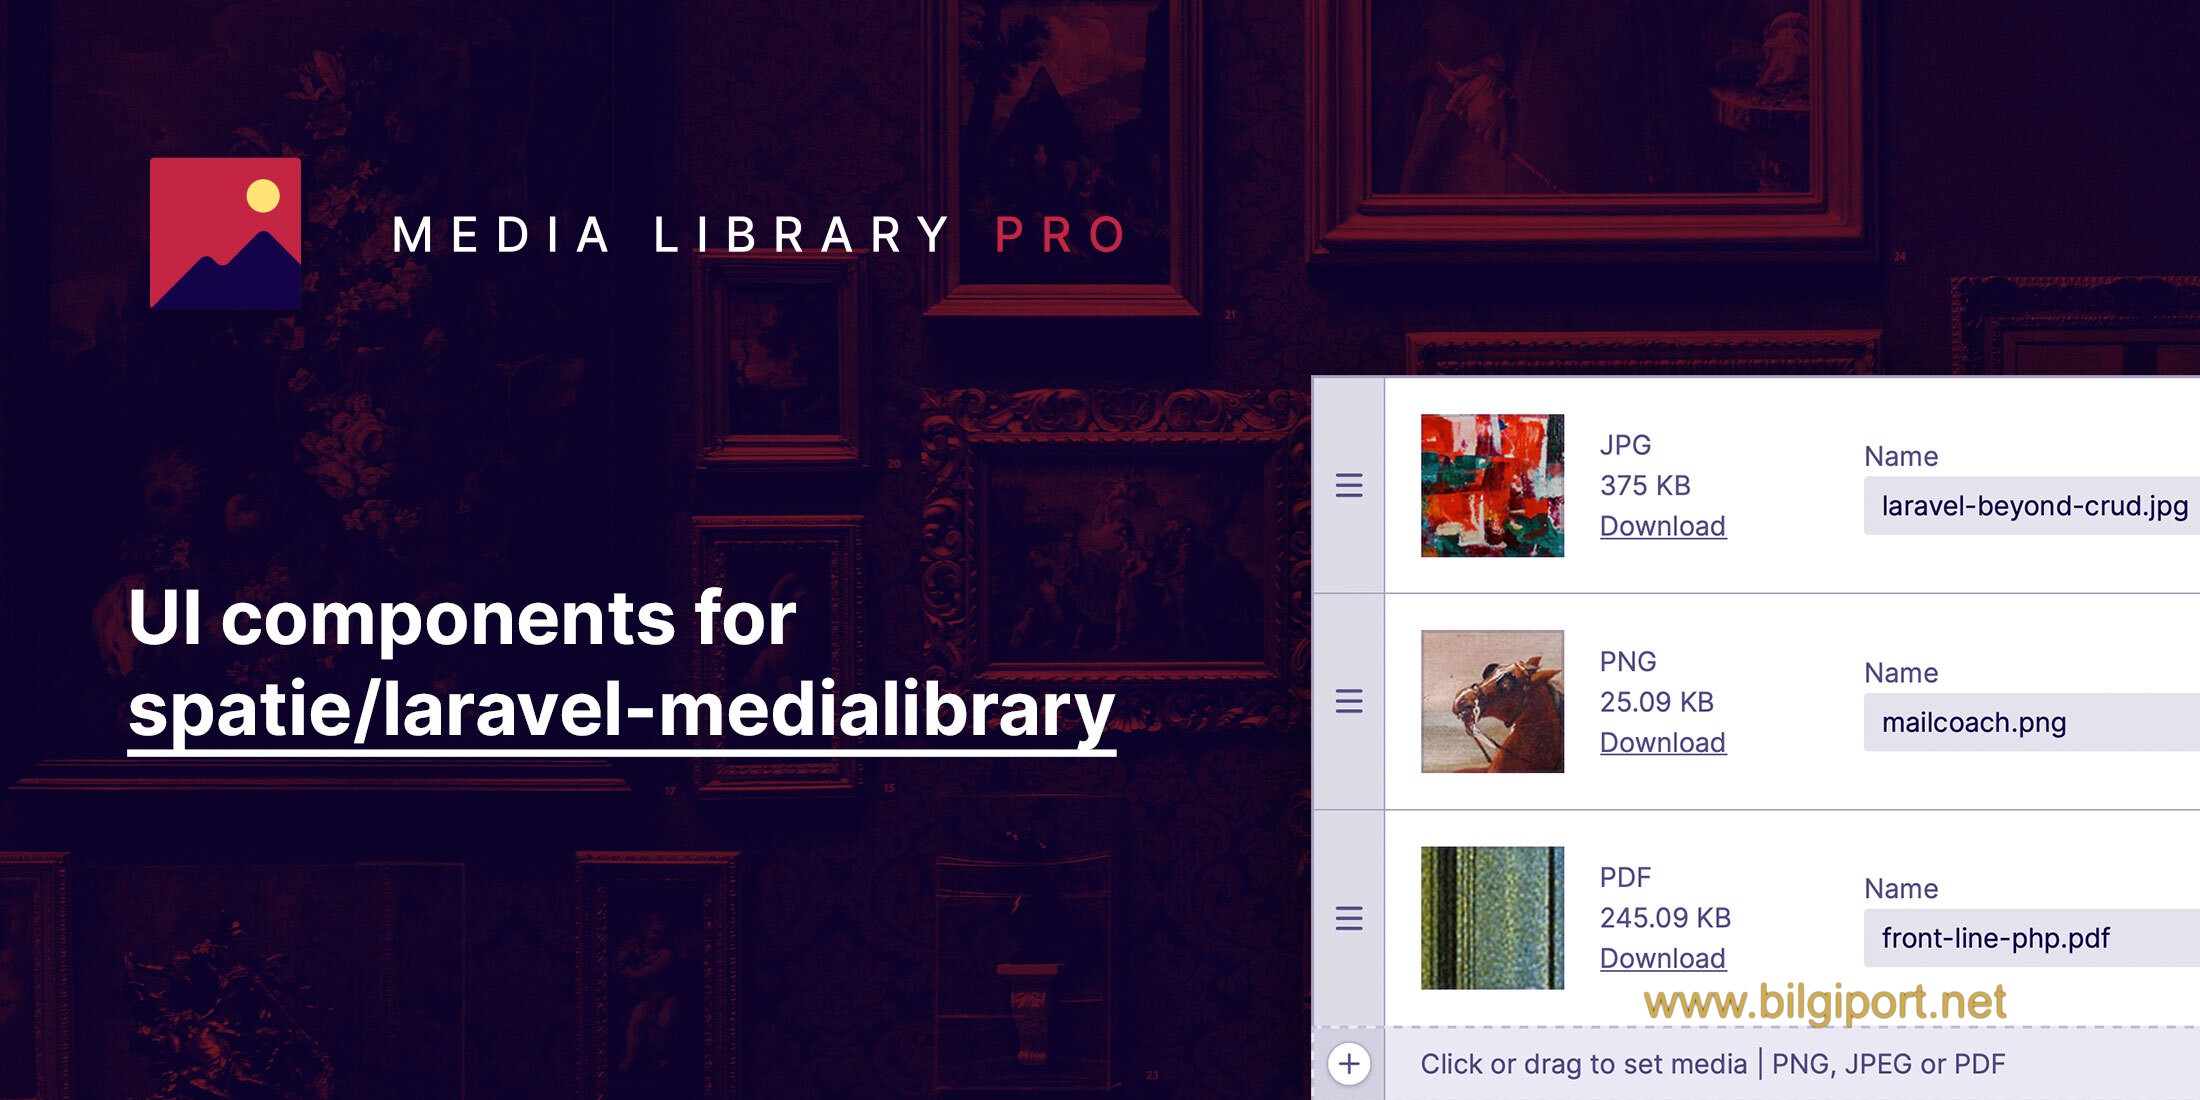 Media Library Pro